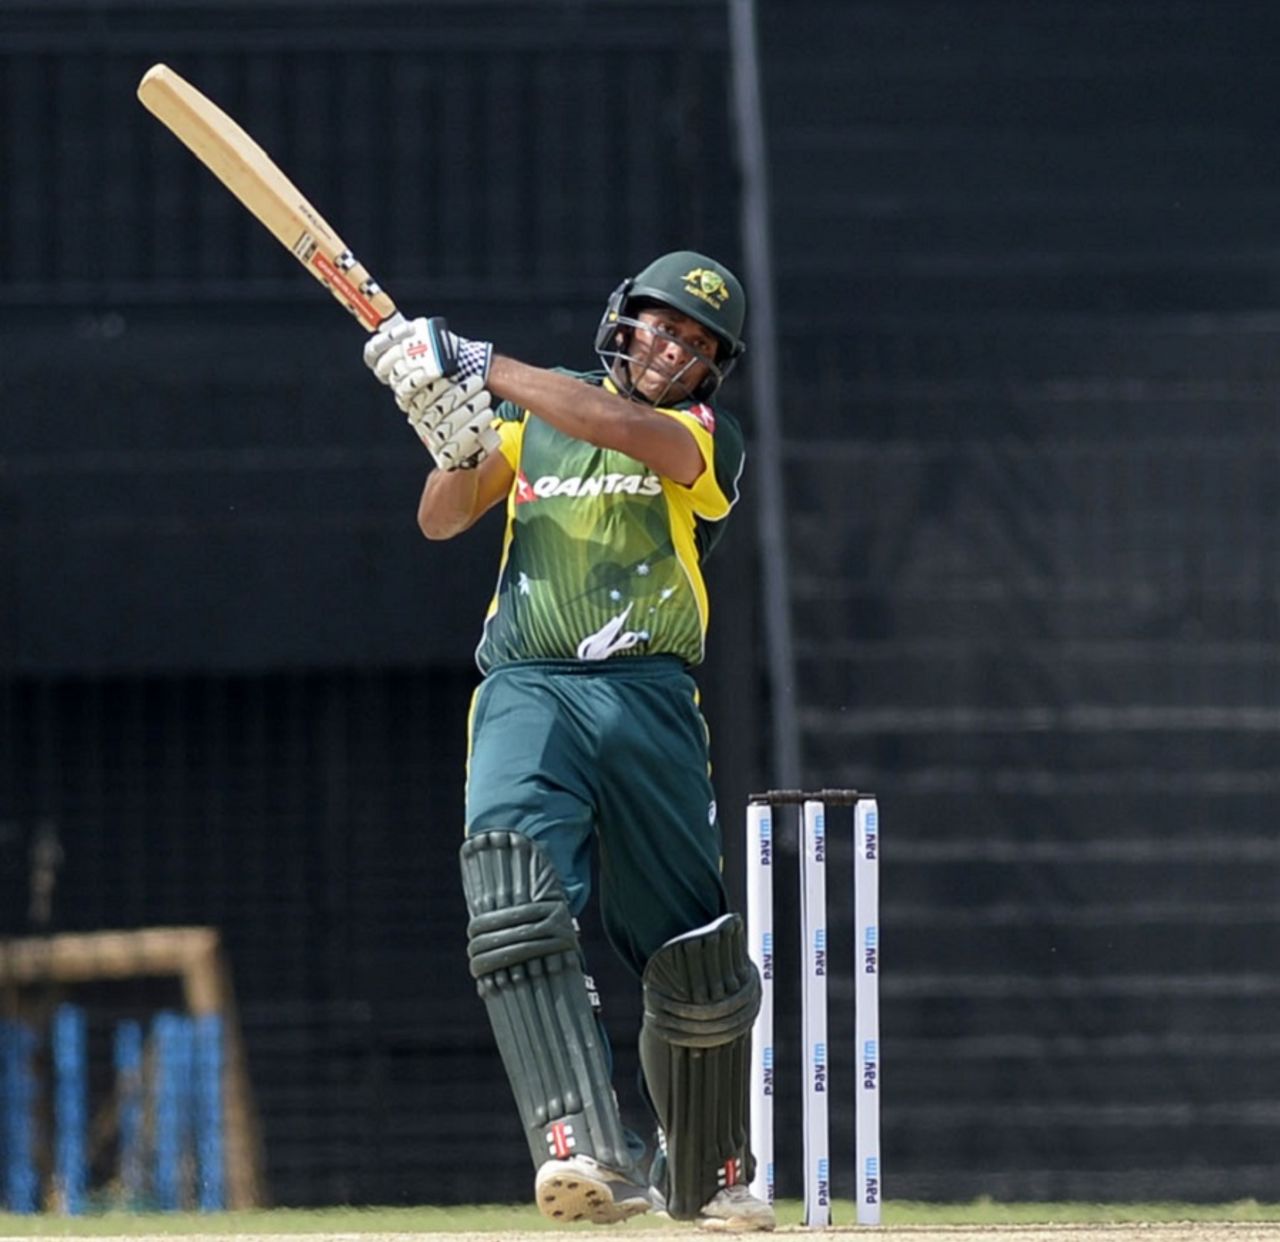 Usman Khawaja flays the ball, Australia A v South Africa A, 1st match, August 5, 2015, Chennai